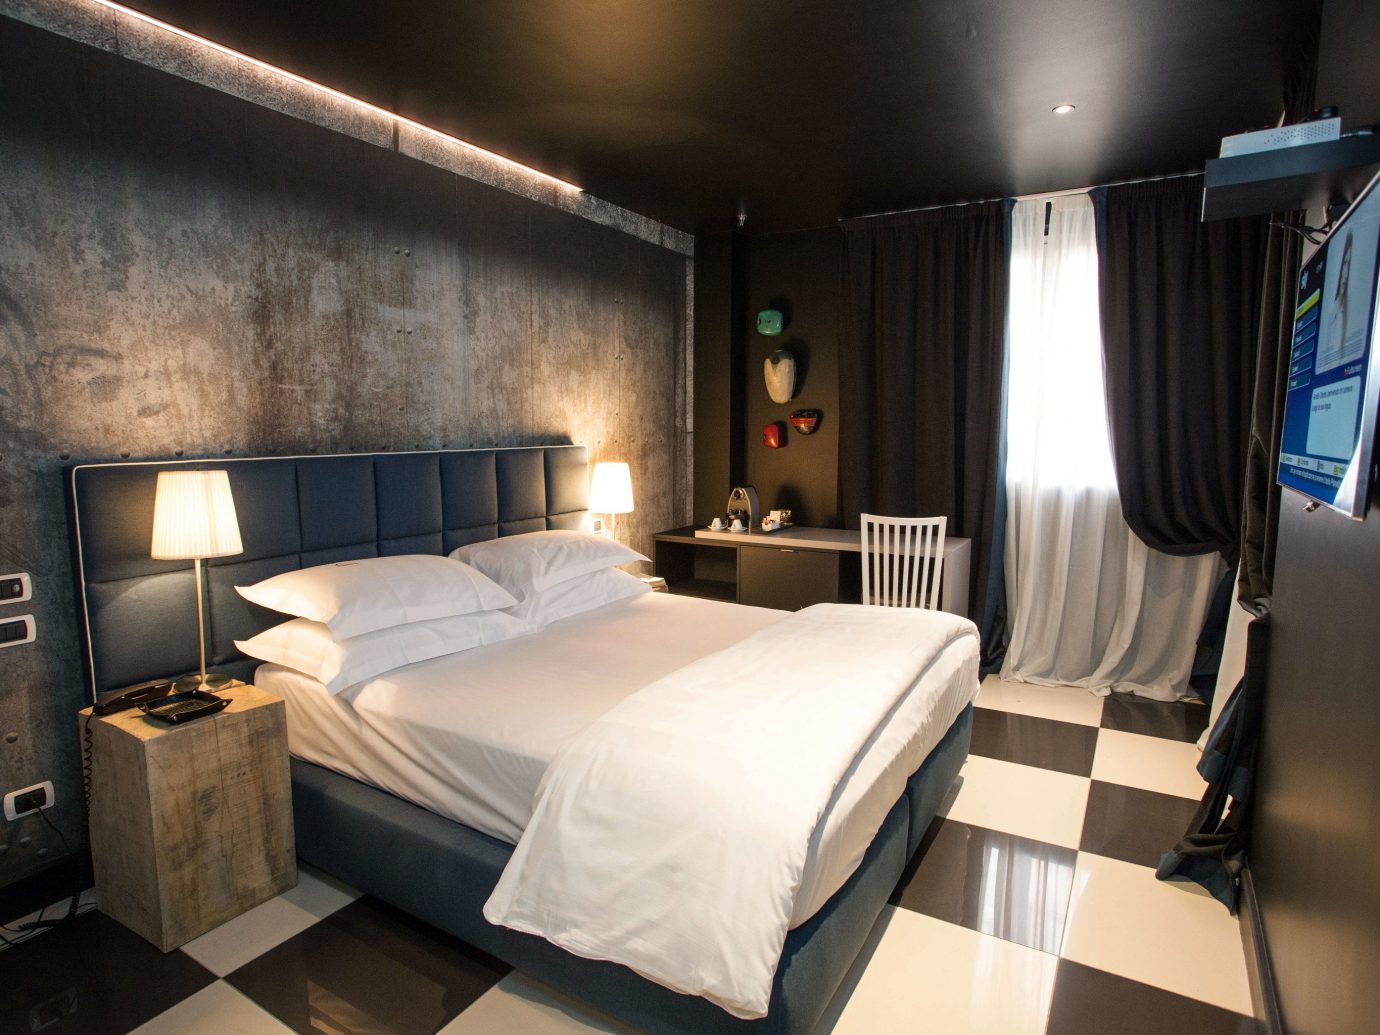 Hotels Italy Milan indoor bed wall room floor property Bedroom ceiling Suite interior design hotel estate cottage